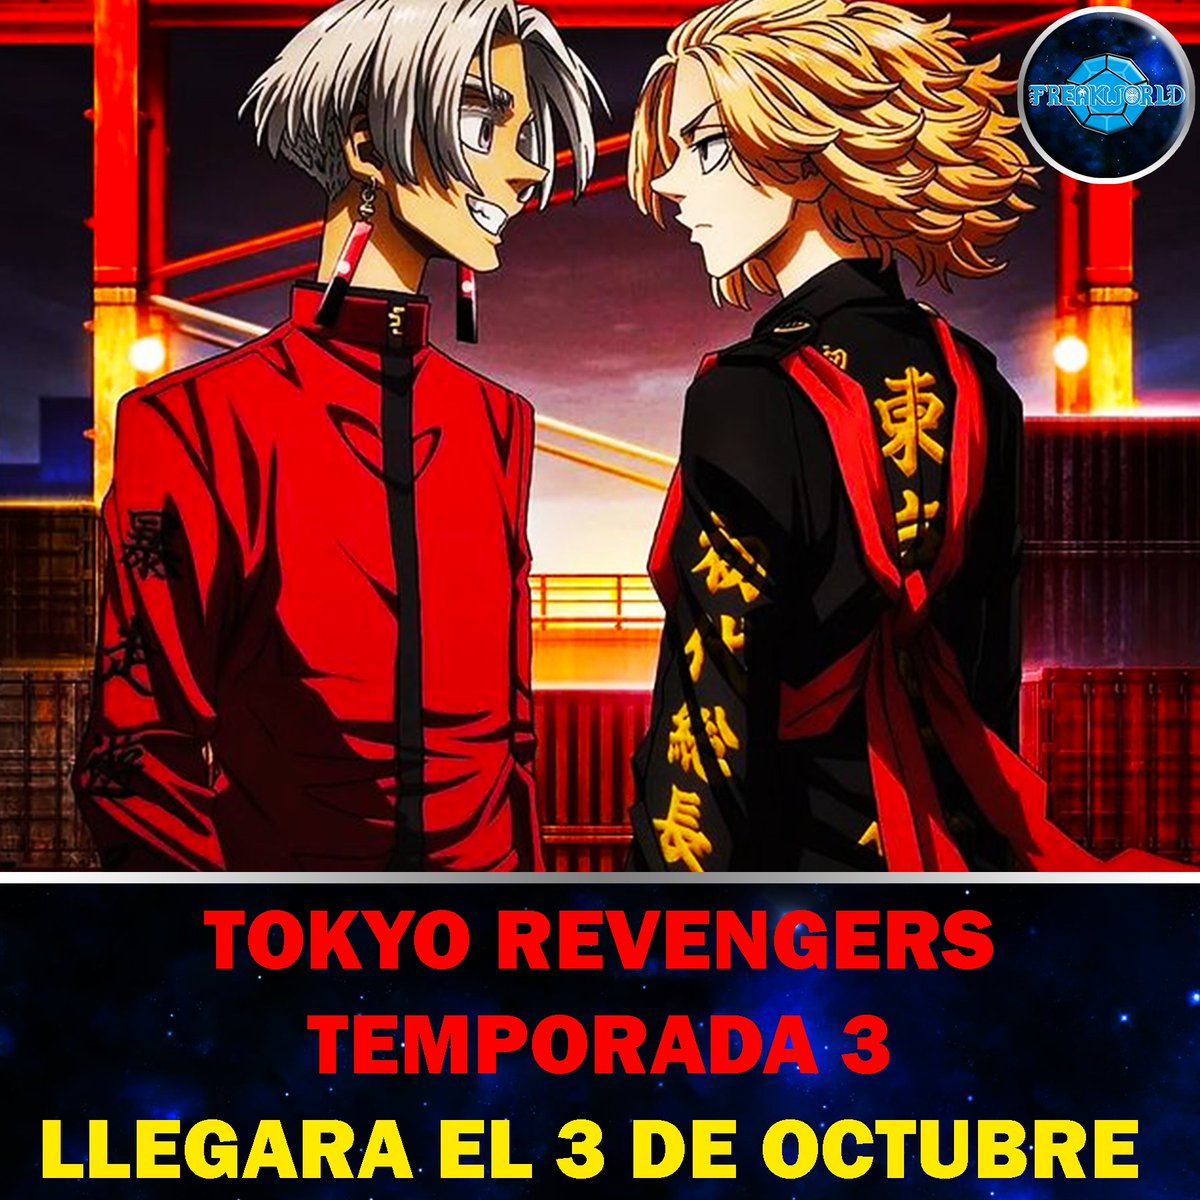 MIKEY CHEGOU!! IZANA VS MIKEY - React Tokyo Revengers EP. 10 Temporada 3 